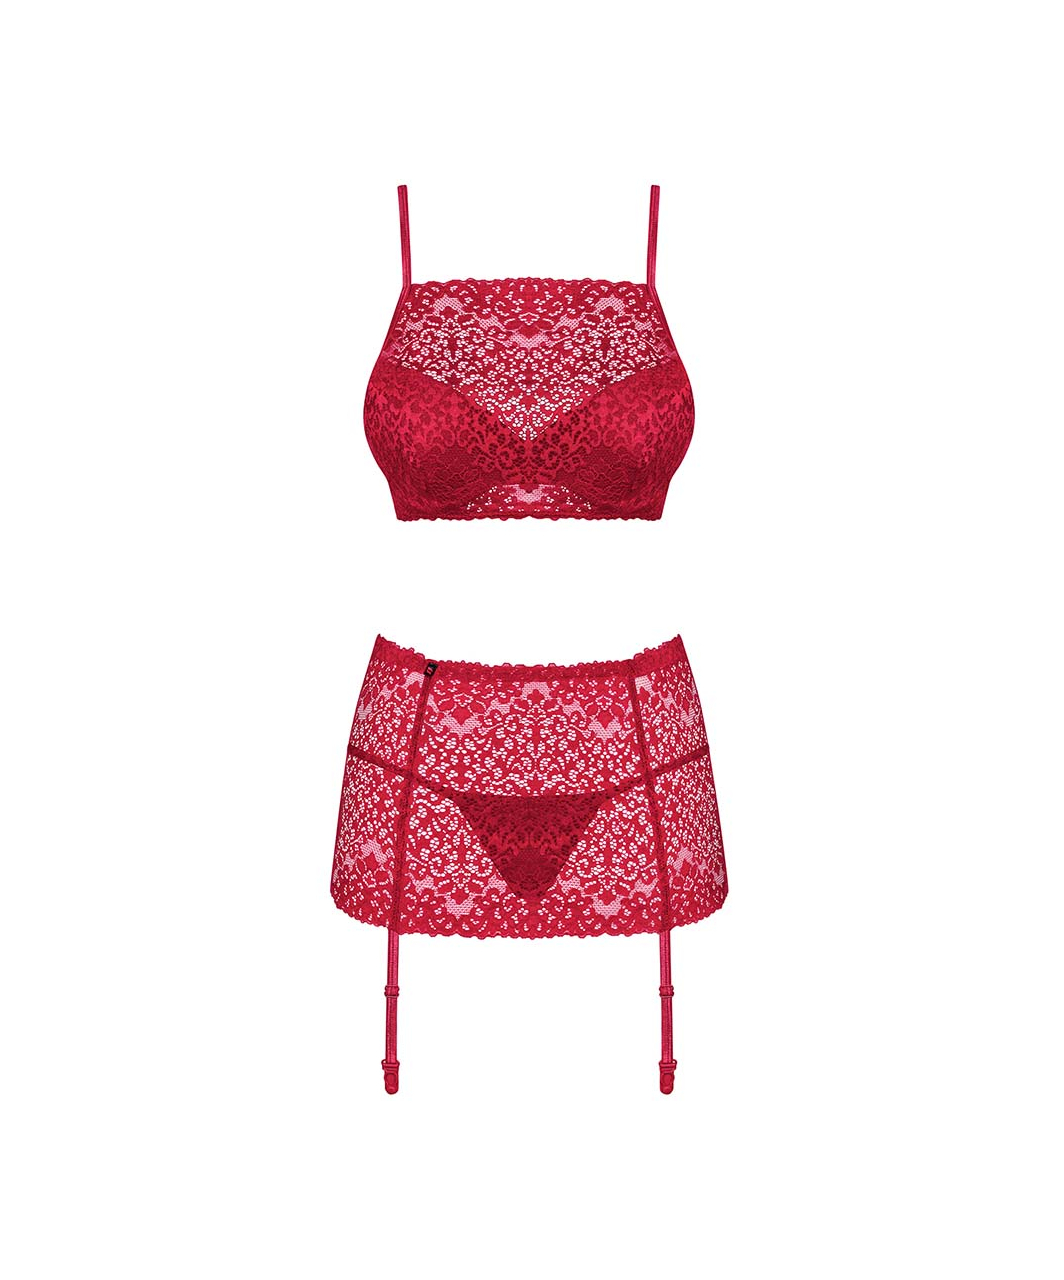 Obsessive Lividia red lace three-piece lingerie set